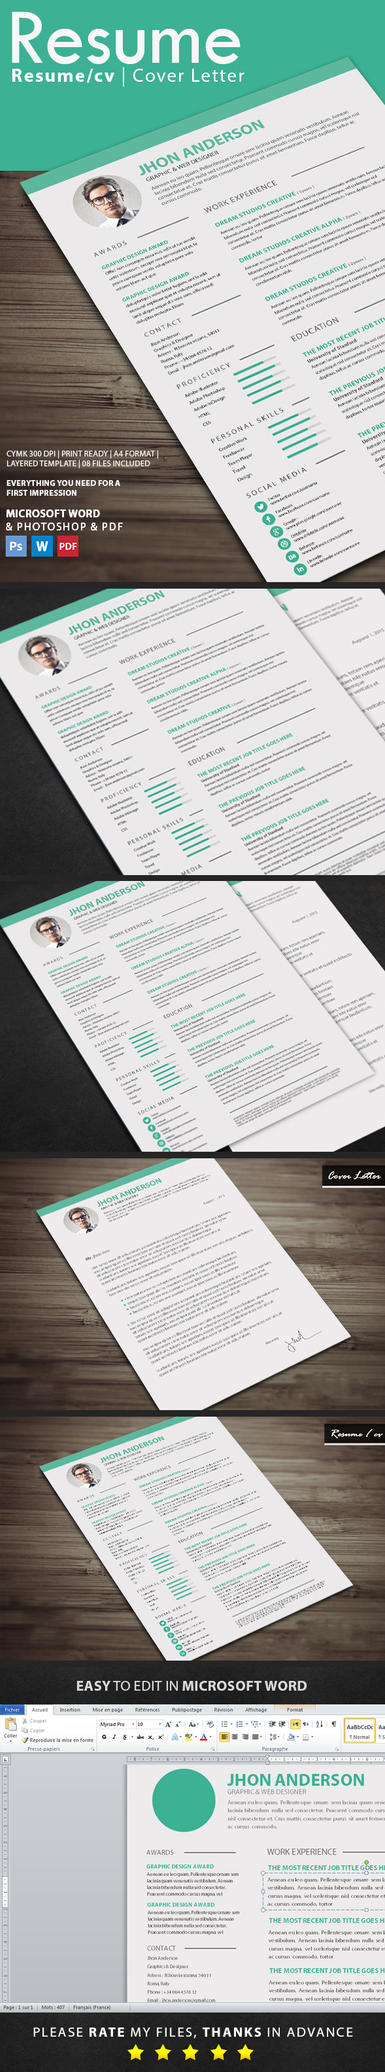 creative resume  updated in psd  doc  docx pdf   by bitifa